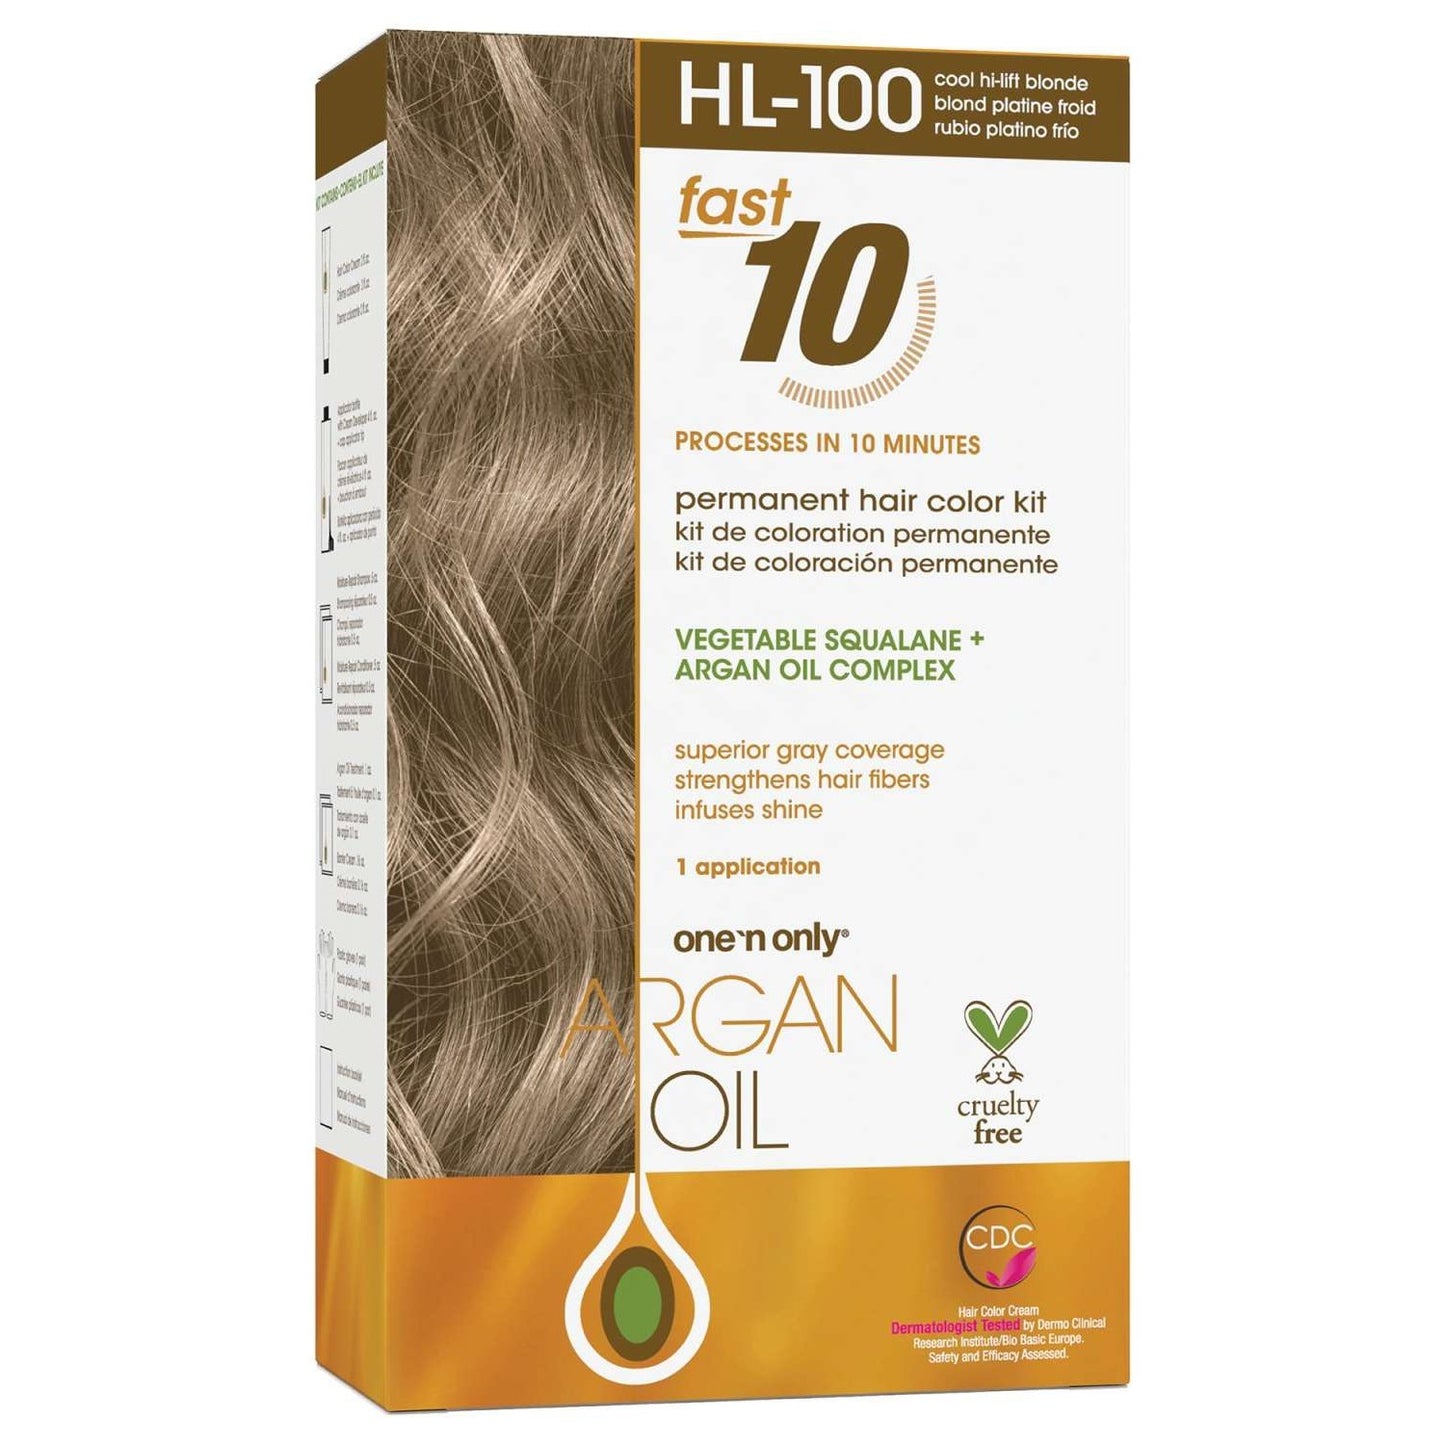 Argan Oil Fast 10 Permananent Hair Color Kit Hl100 Cool Hi-Lift Blonde